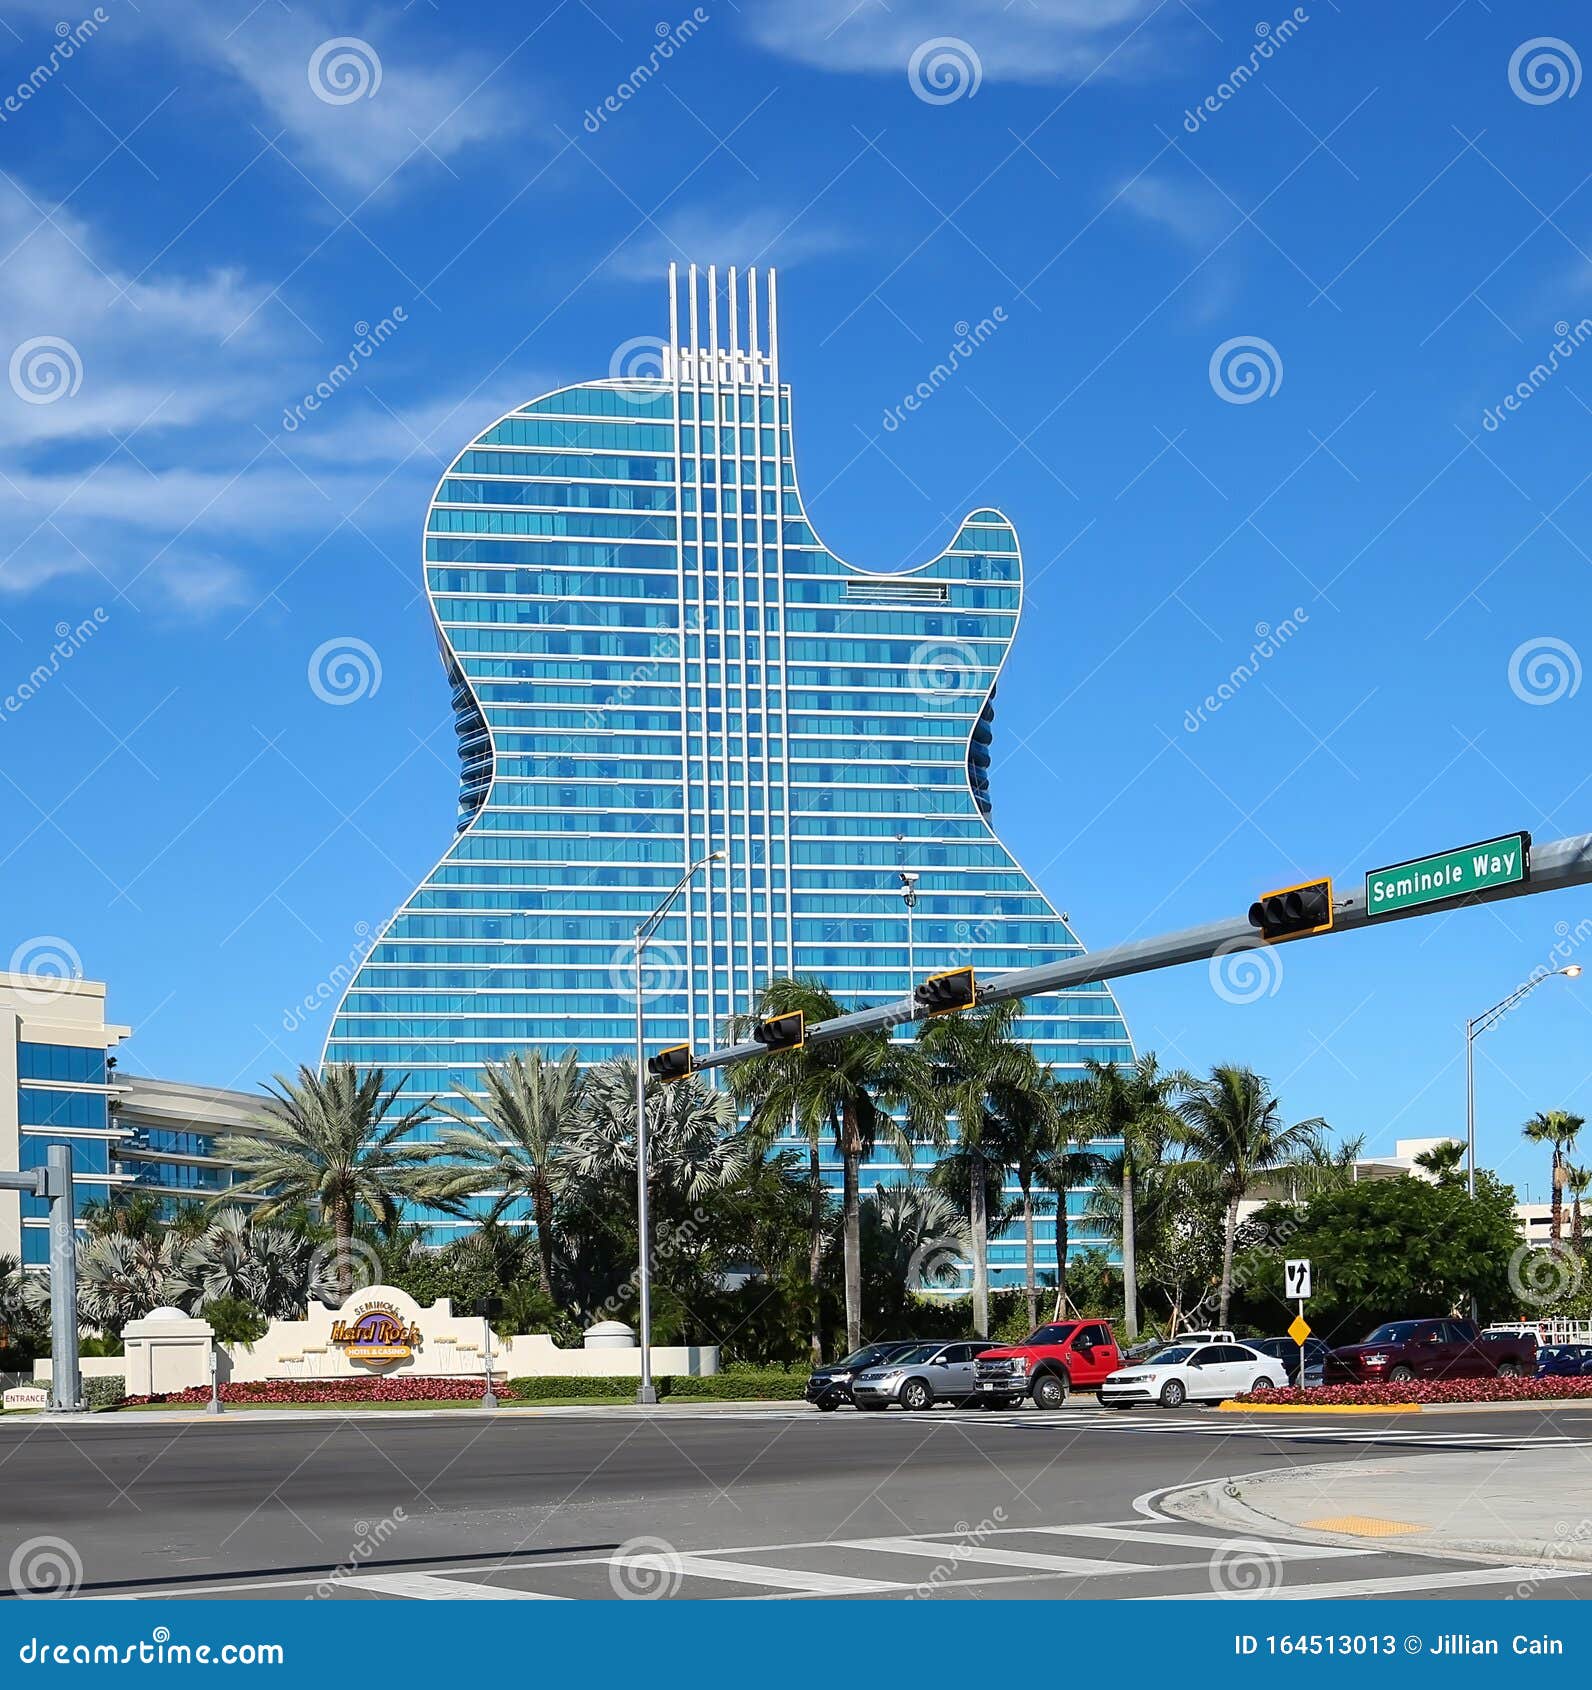 Hard Rock Guitar Hotel in Florida Editorial Stock Photo - Image of  entertainment, destination: 164513013